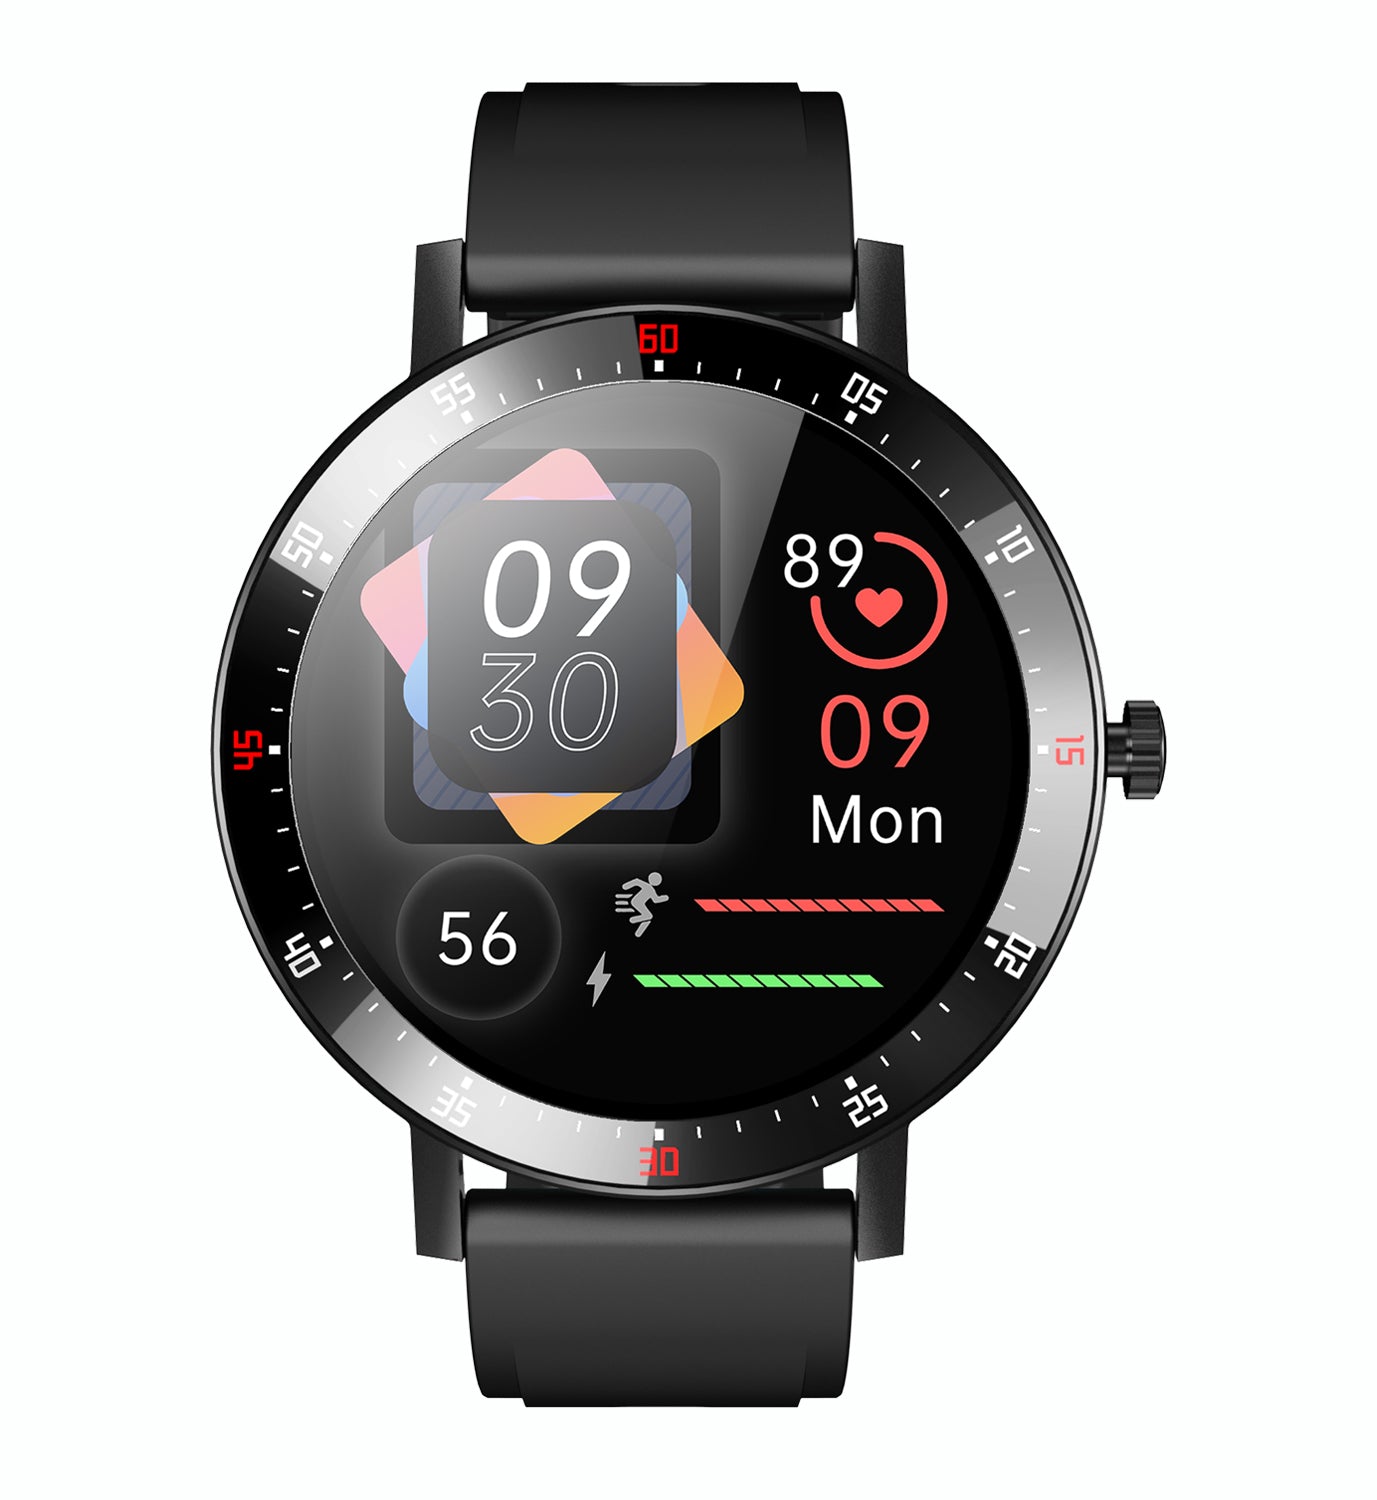 MorePro F18 smartwatch - MorePro